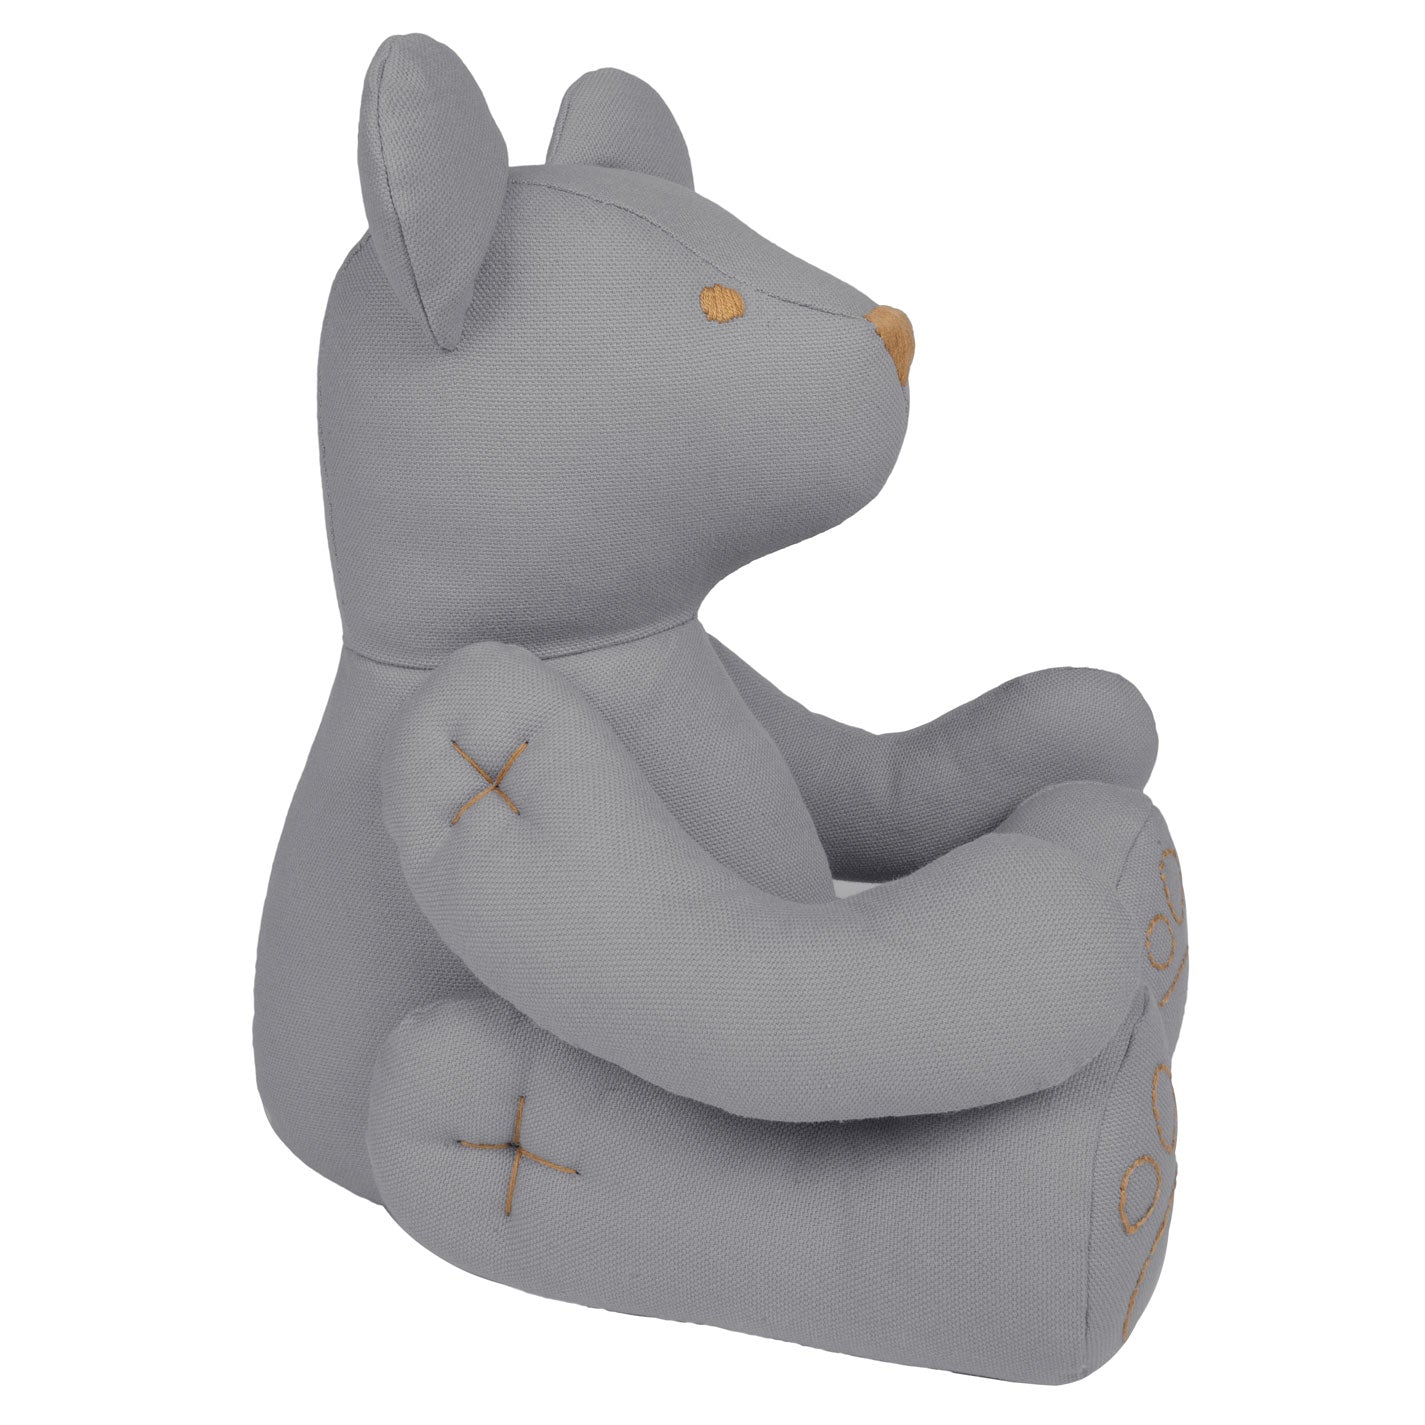 Ted Bear Cushion - Stone Grey (Small)